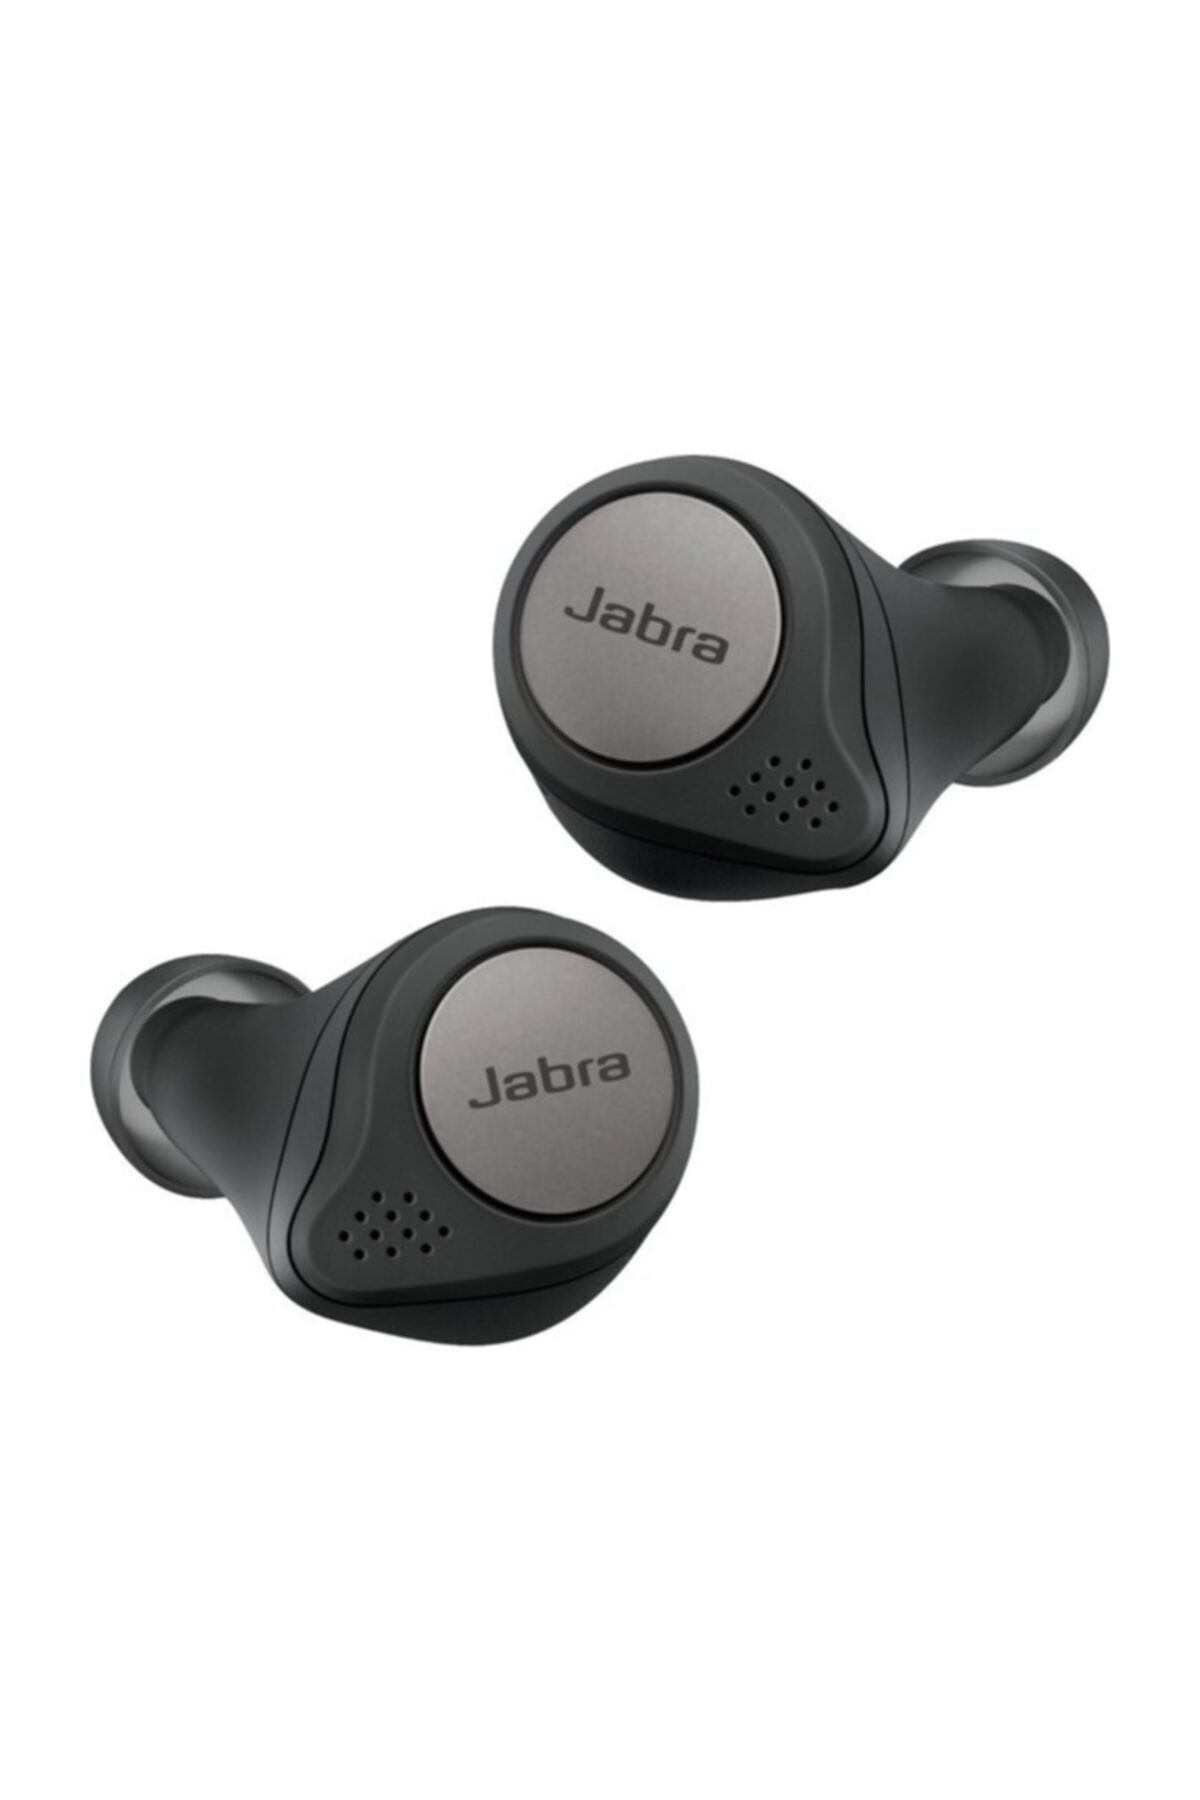 Jabra Elite Active 75T LP57 Su Ve Toz Geçirmez Kulakiçi Bluetooth Kulaklık Titanium Siyah